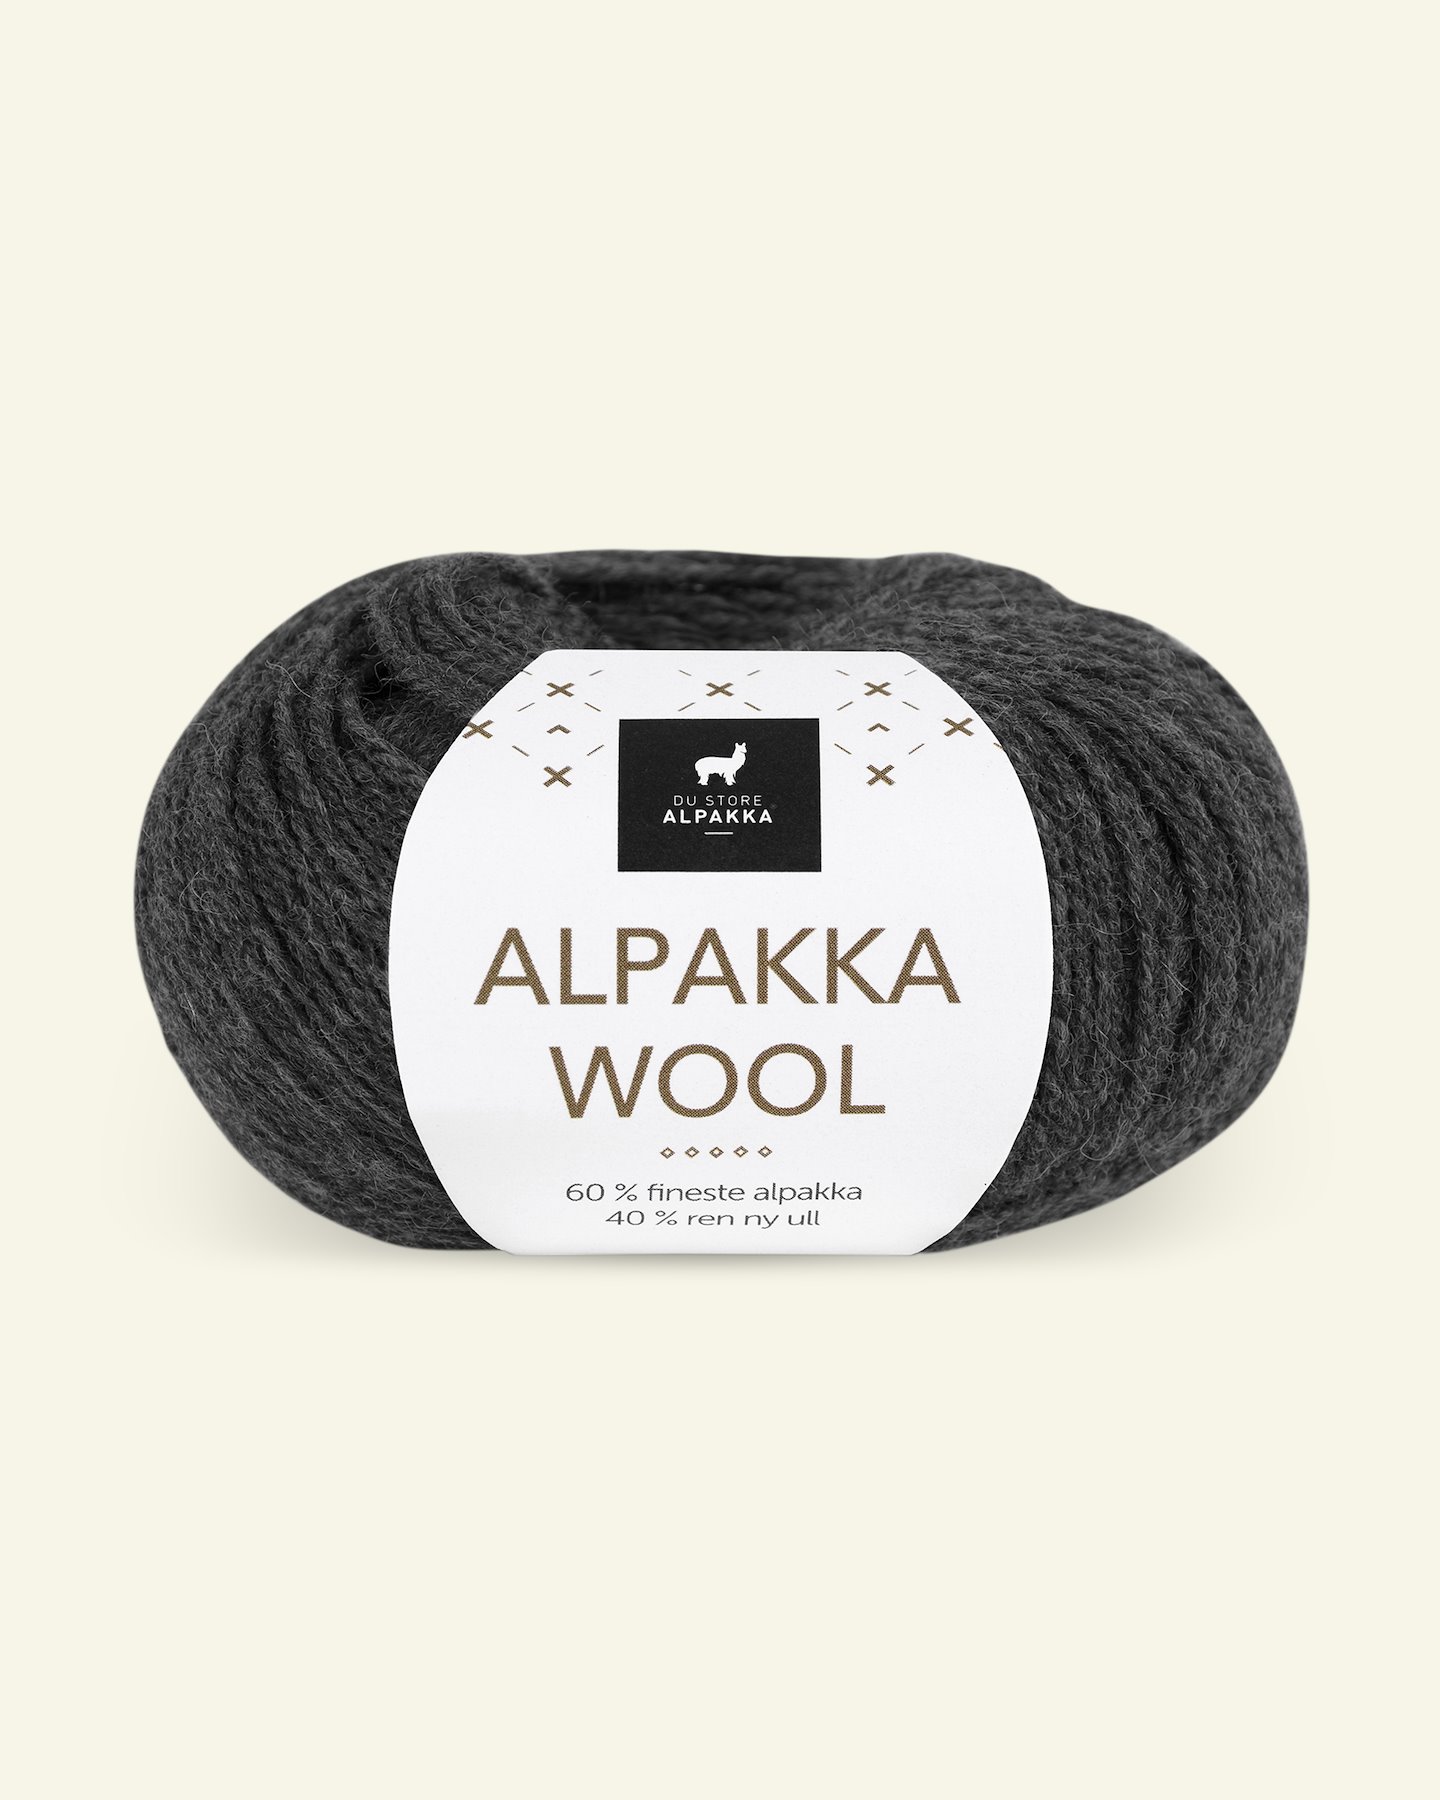 Du Store Alpakka, alpaca wool yarn, "Alpakka Wool", charcoal (504) 90000550_pack